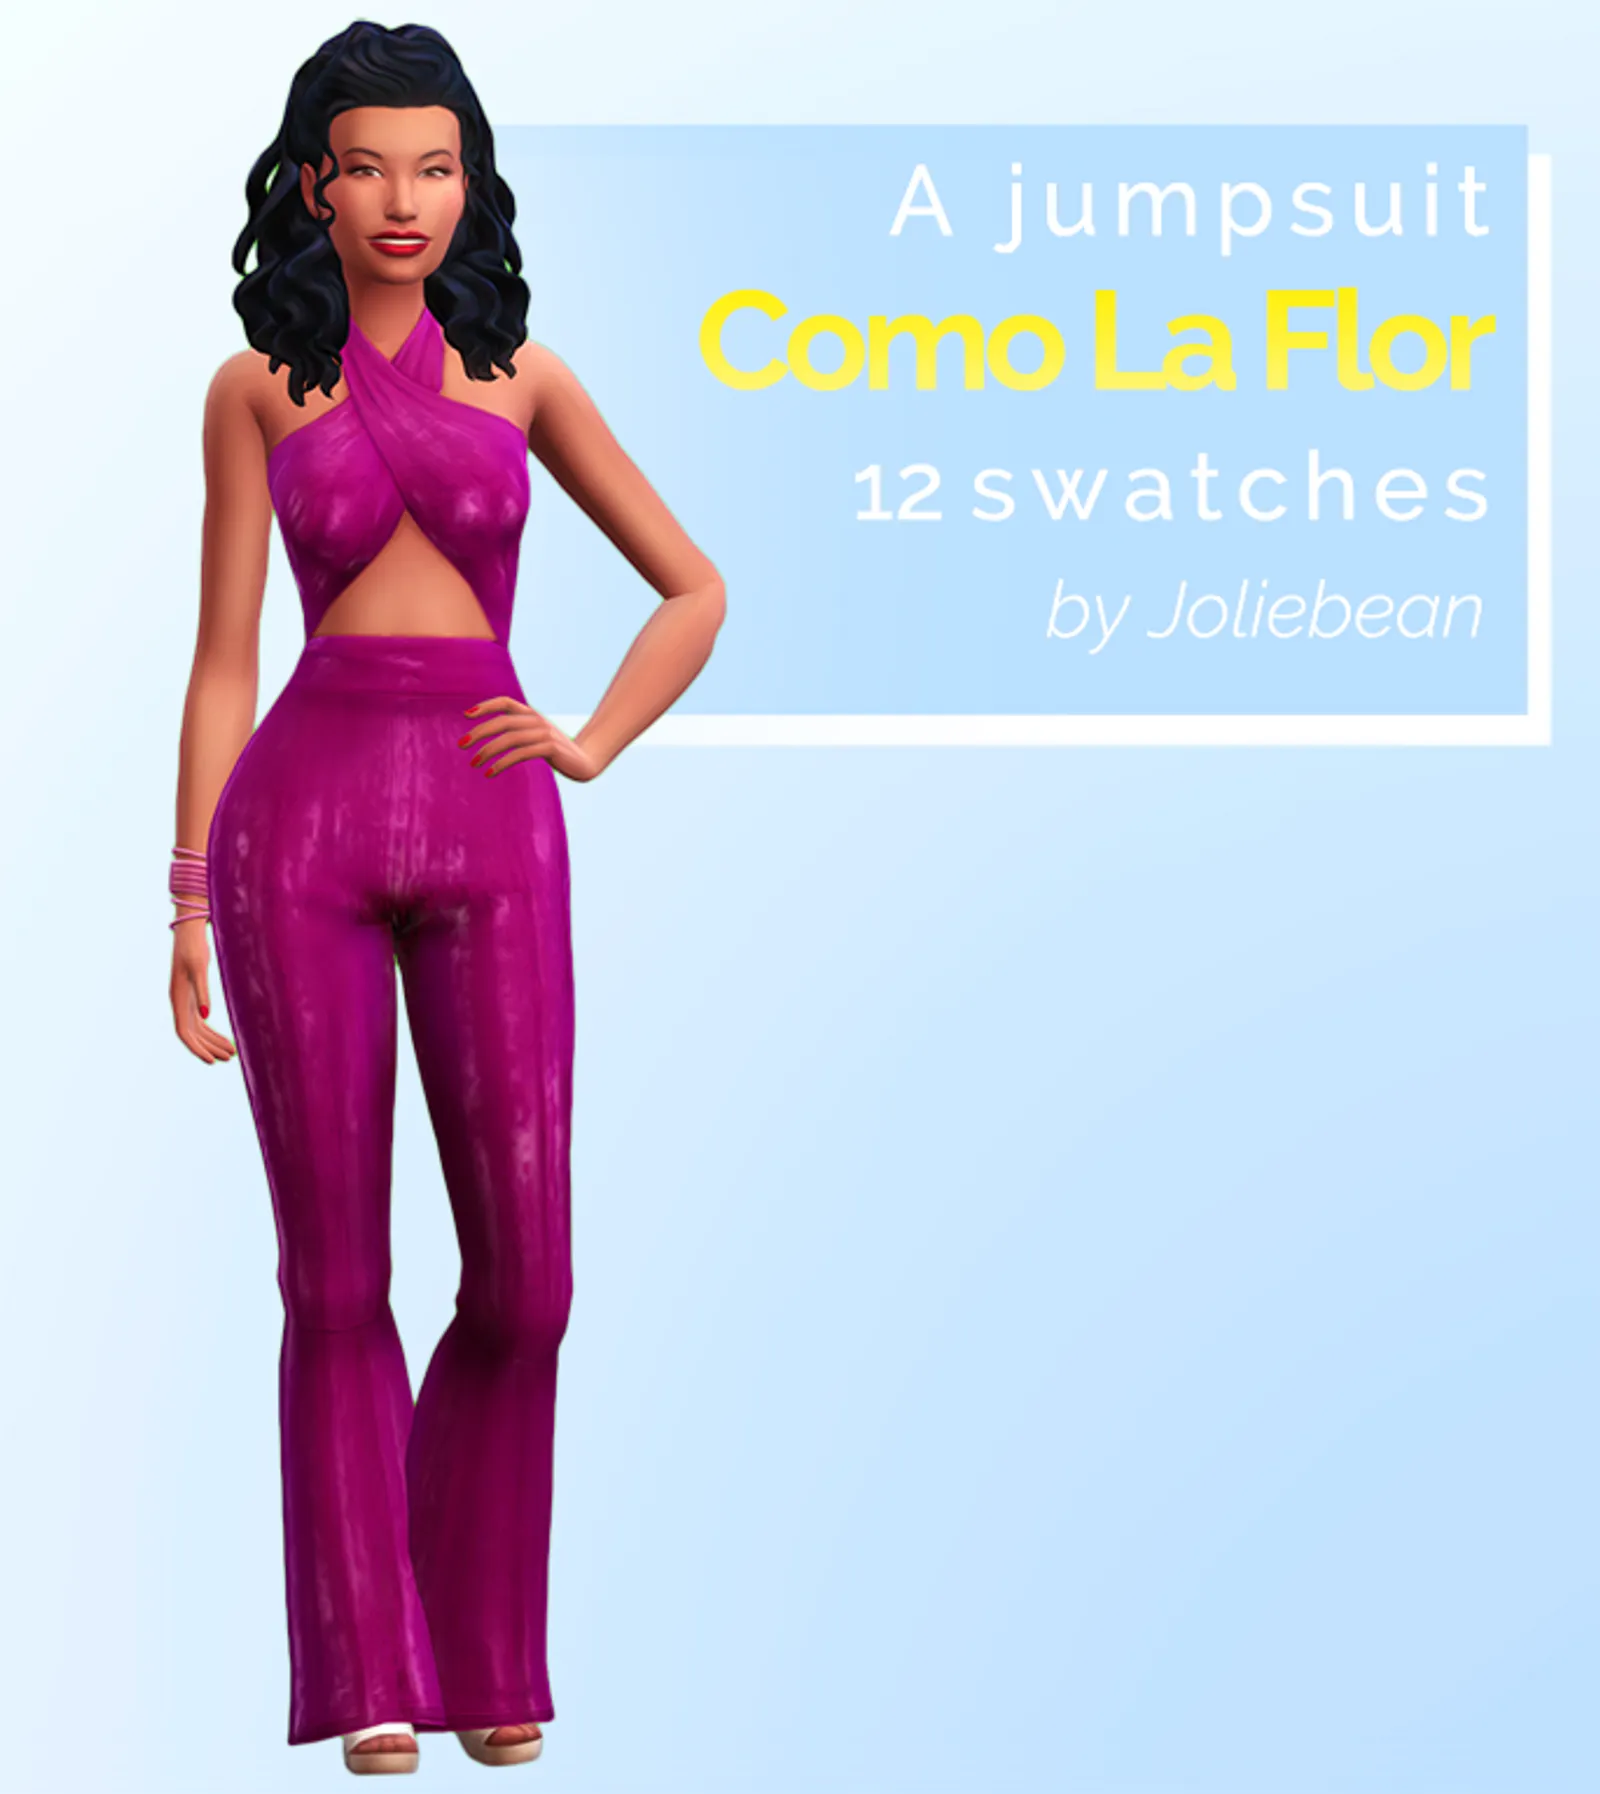 Como La Flor jumpsuit in 12 swatches by Joliebean